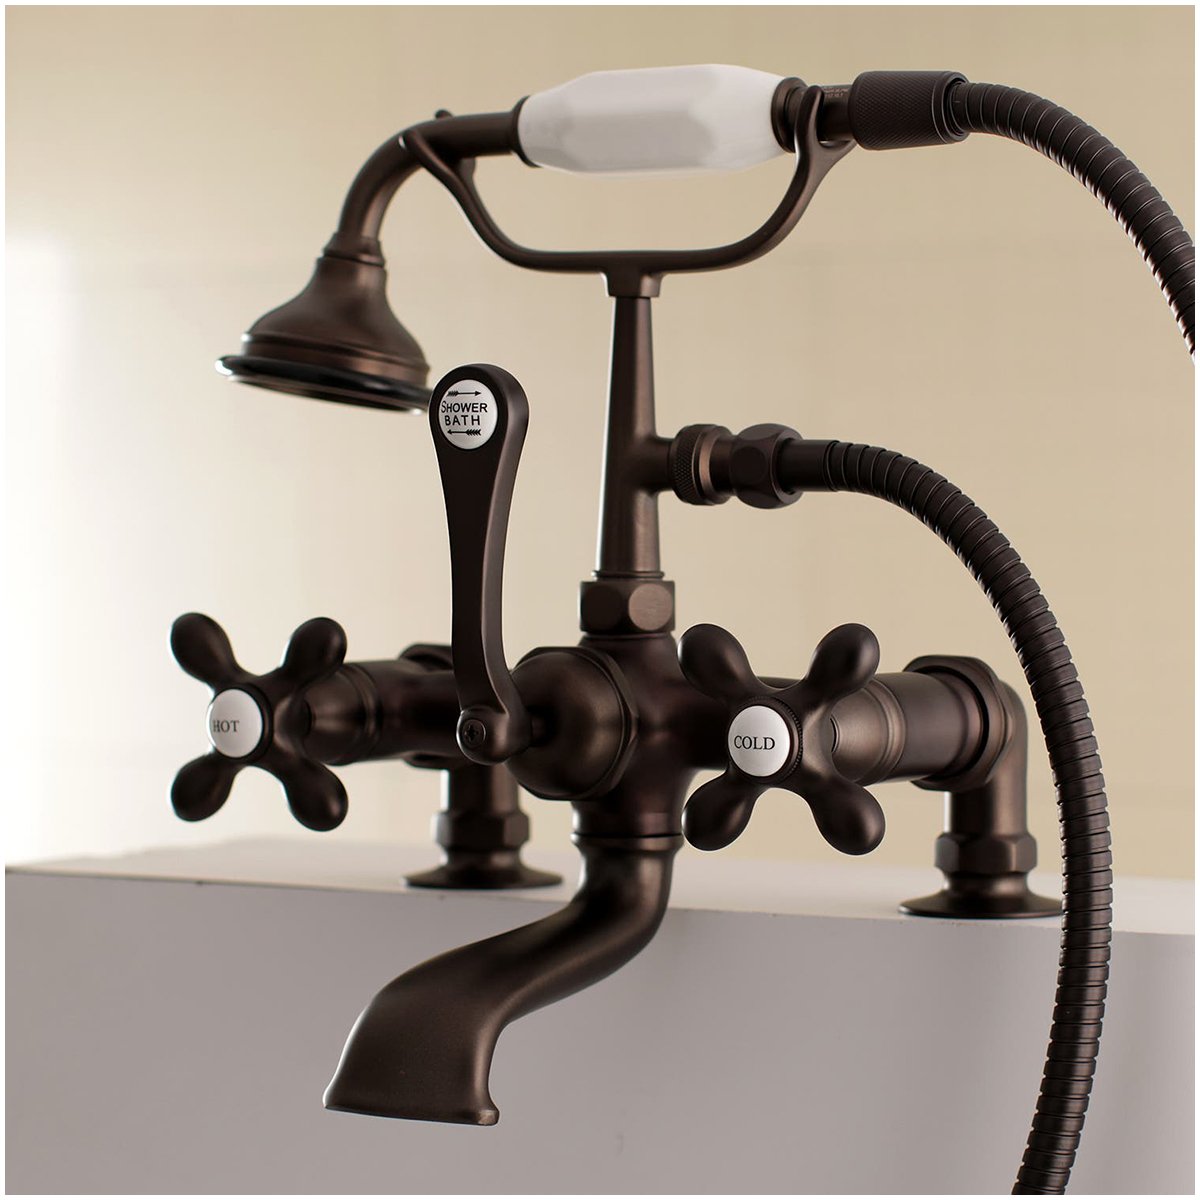 Aqua Vintage AE209TX-P7-Inch Tub Faucet with Hand Shower